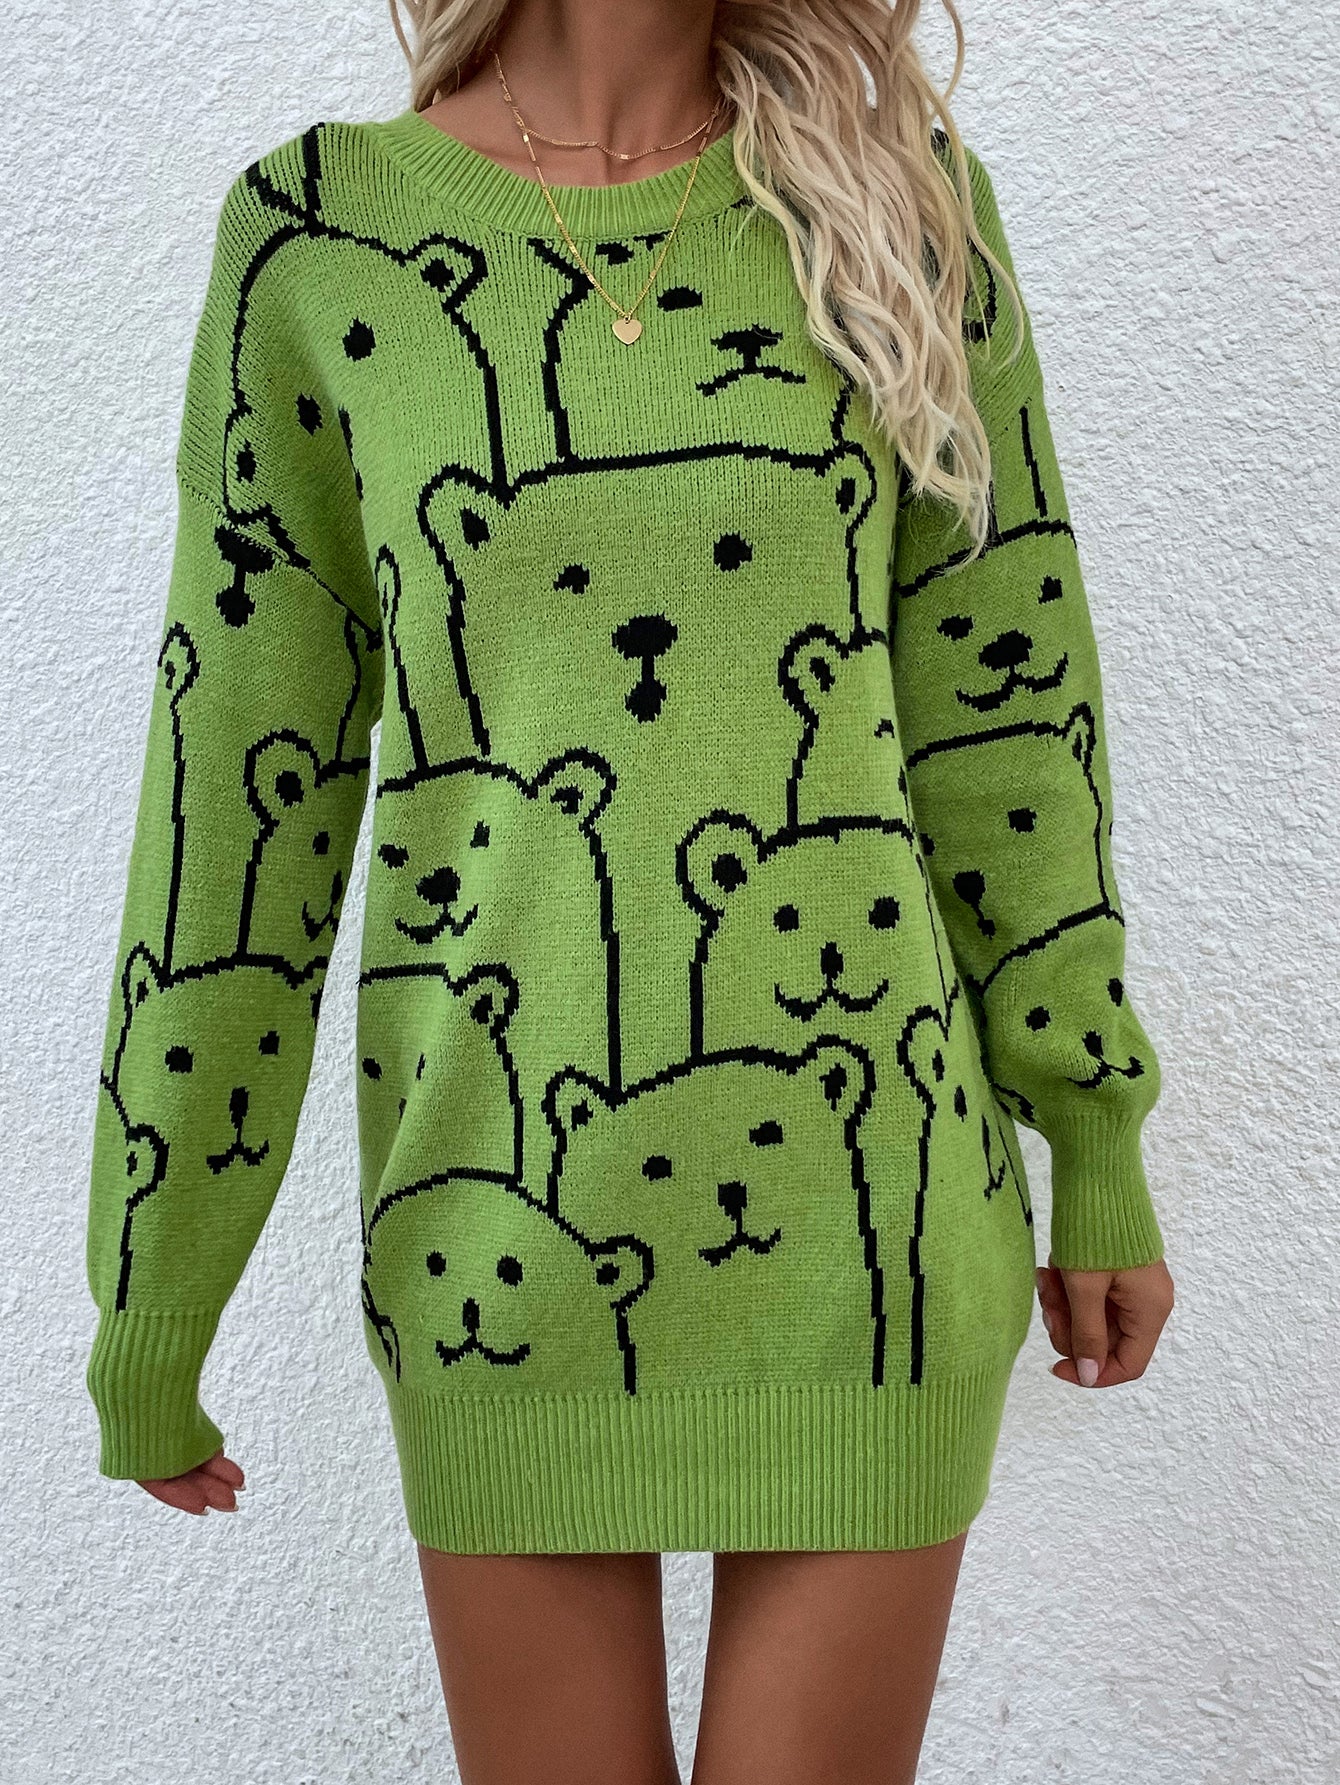 Bear Print Oversize Sweater (2 colors)